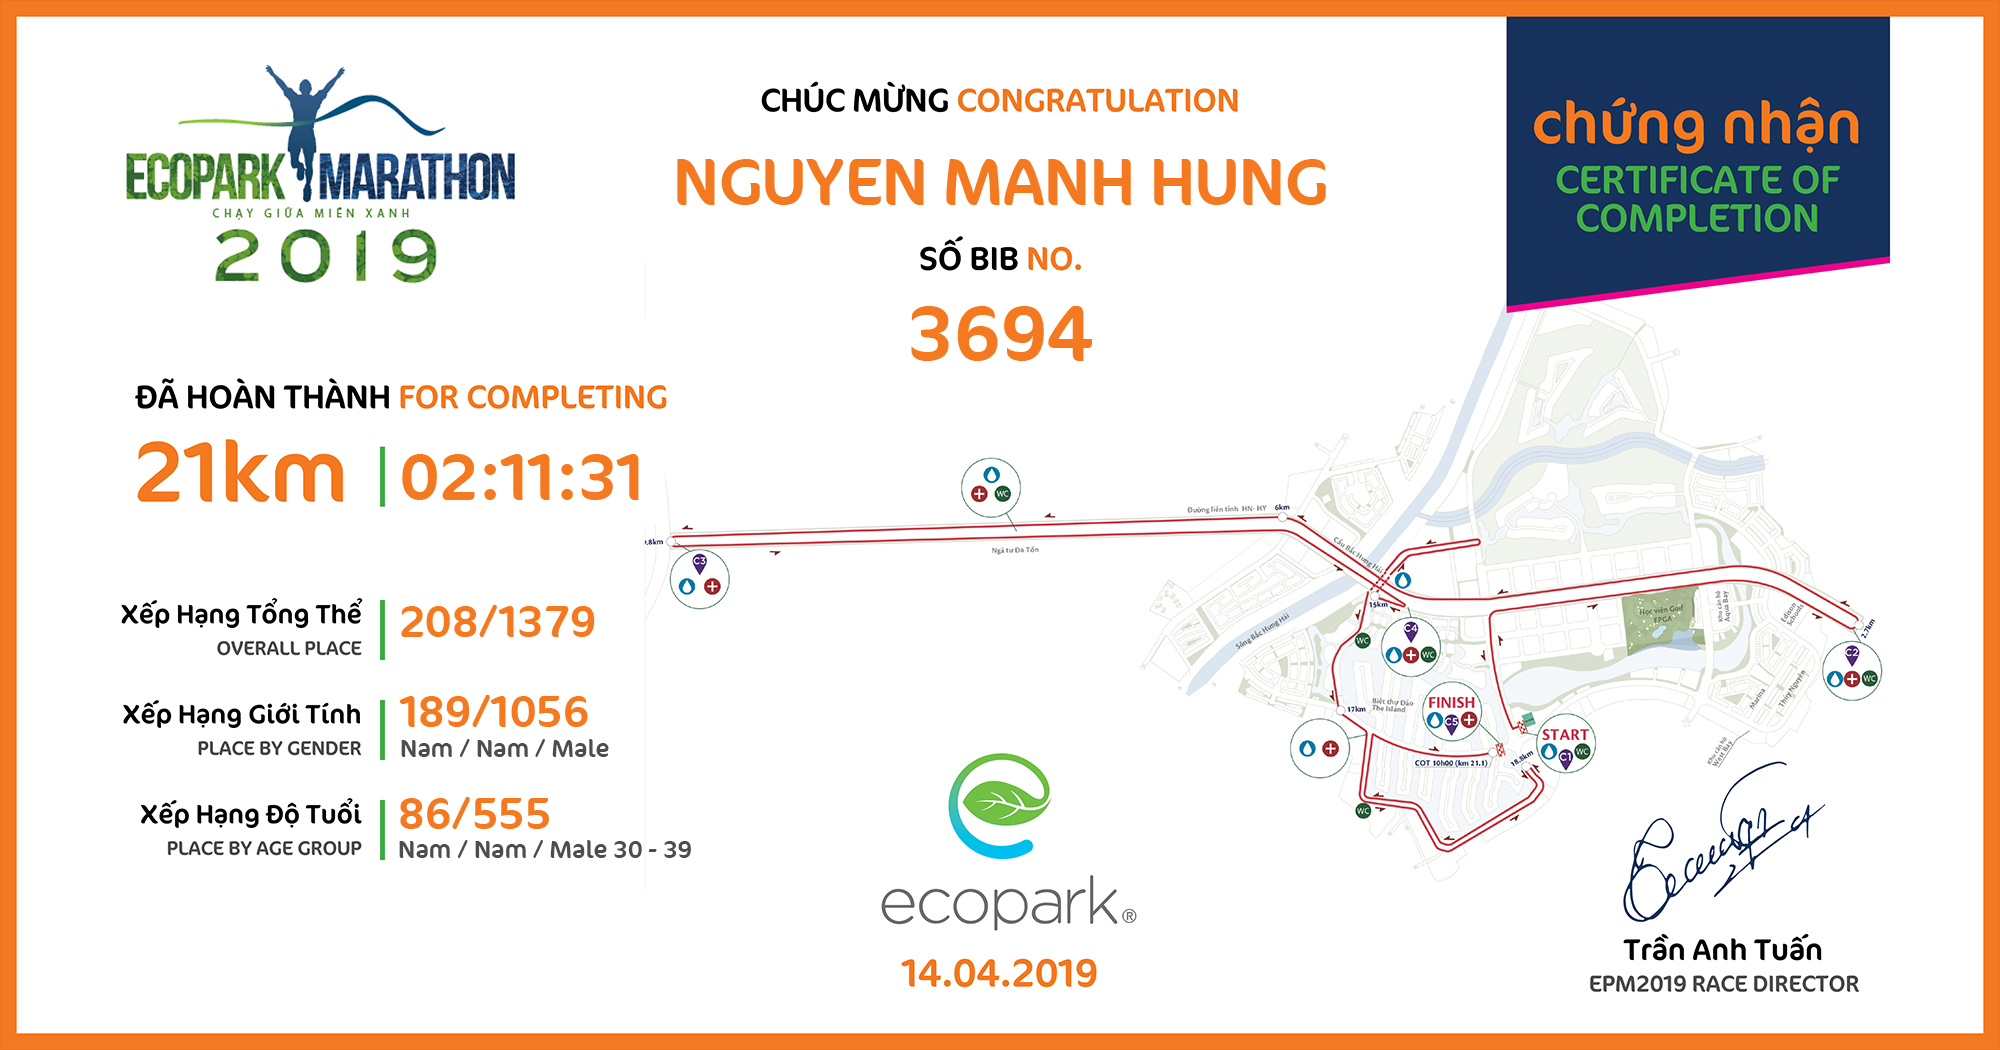 3694 - Nguyen Manh Hung